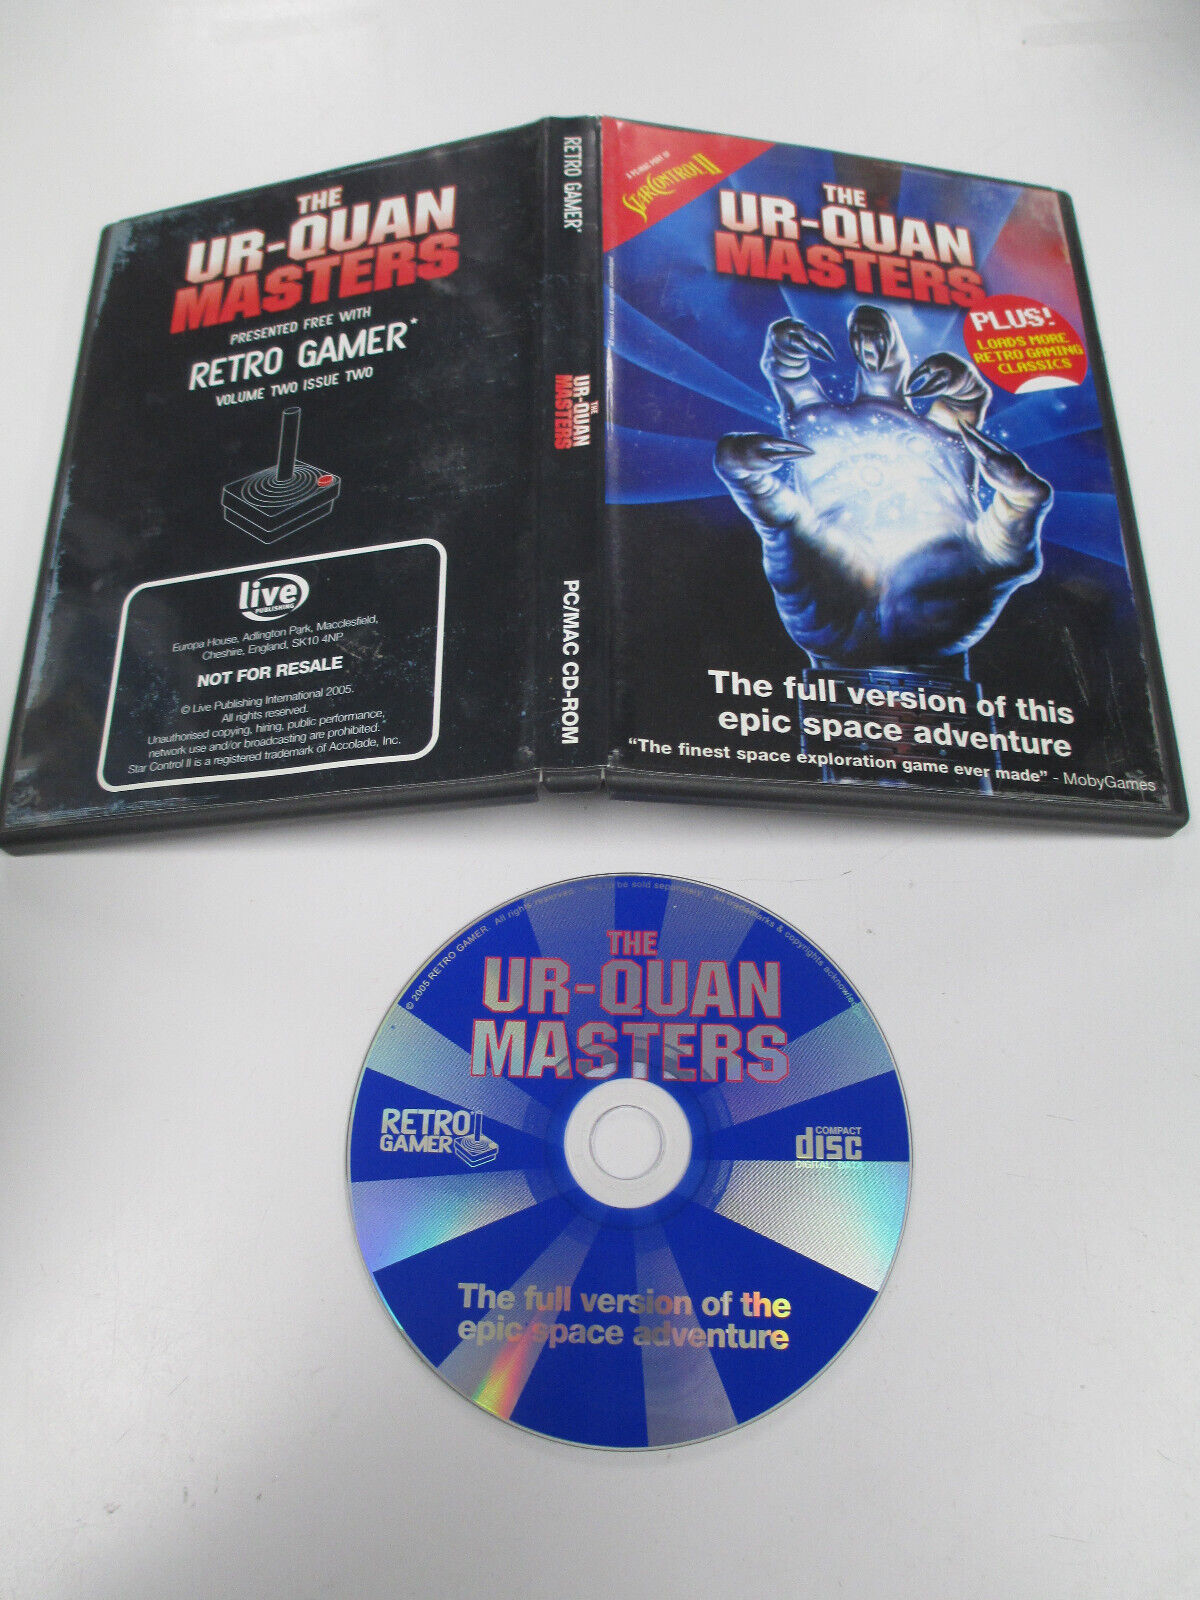 Retro Gamer Volume 2 Issue 2: The Ur-Quan Masters PC CD-ROM Star Control games